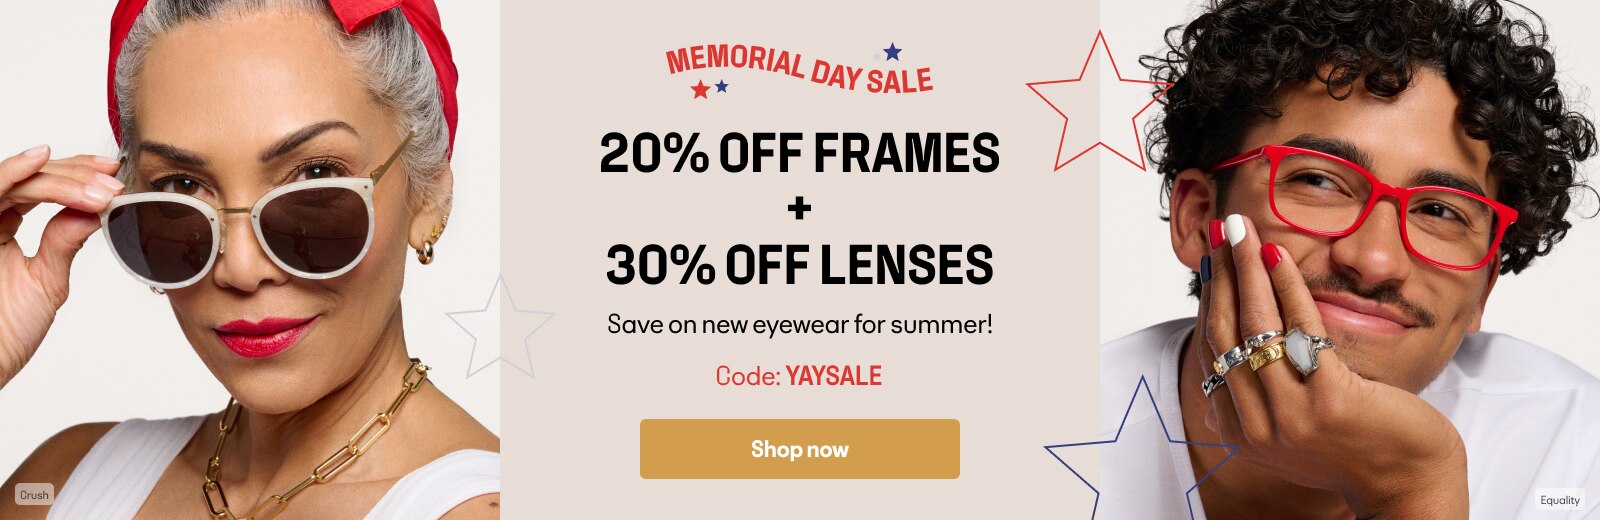 20% Off Frames 30% Off Lenses. Code: YAYSALE Save on new eyewear for summer!